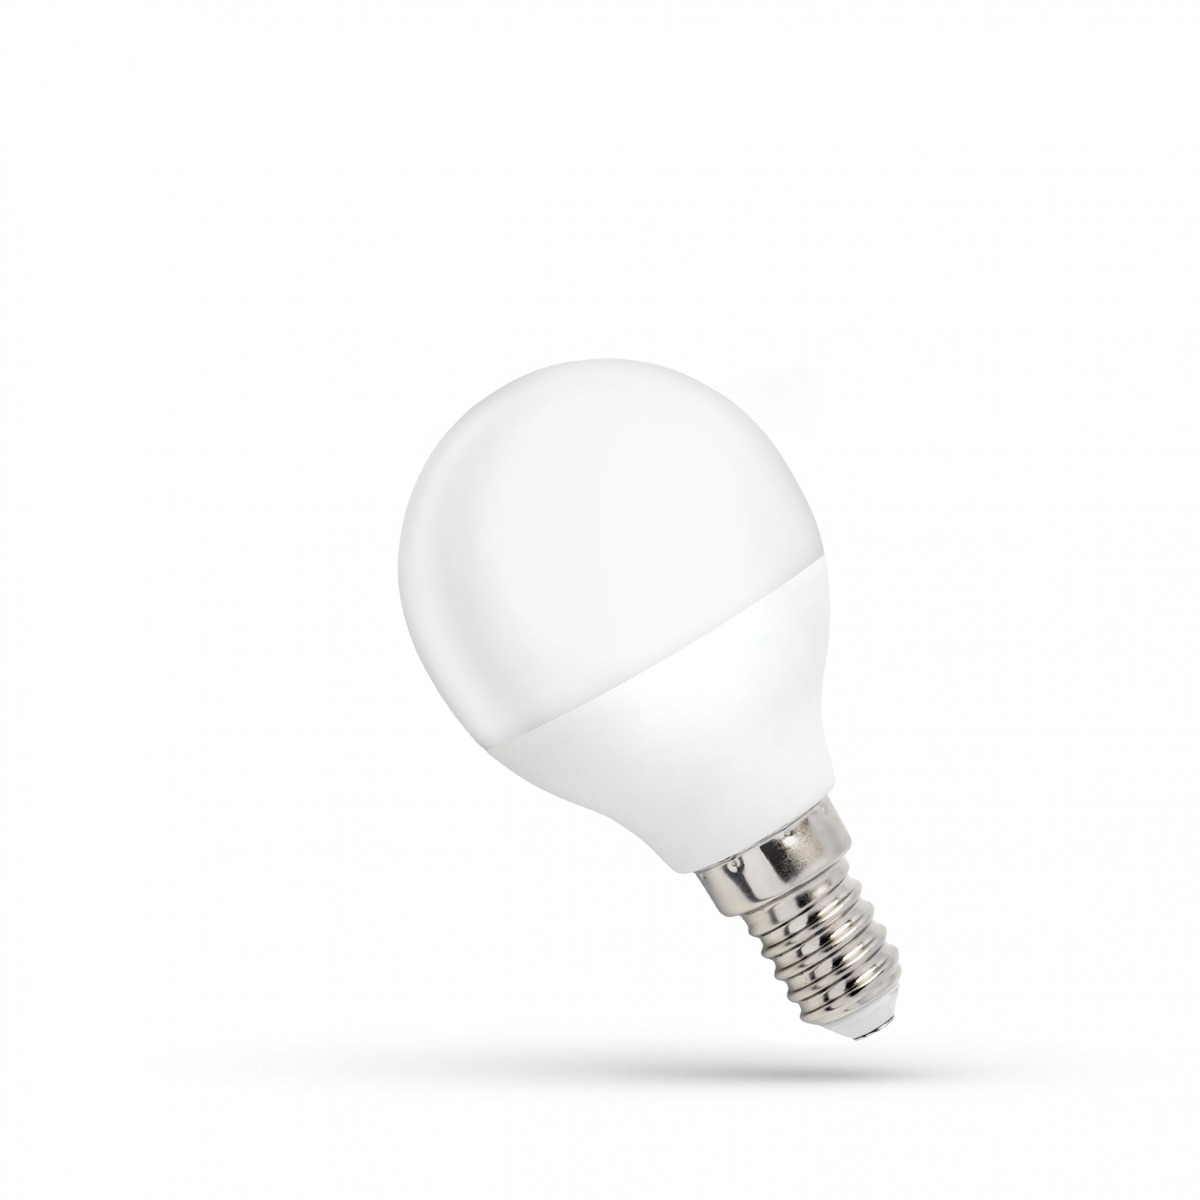 E14 LED Light Bulbs Teardrop Ball 4W